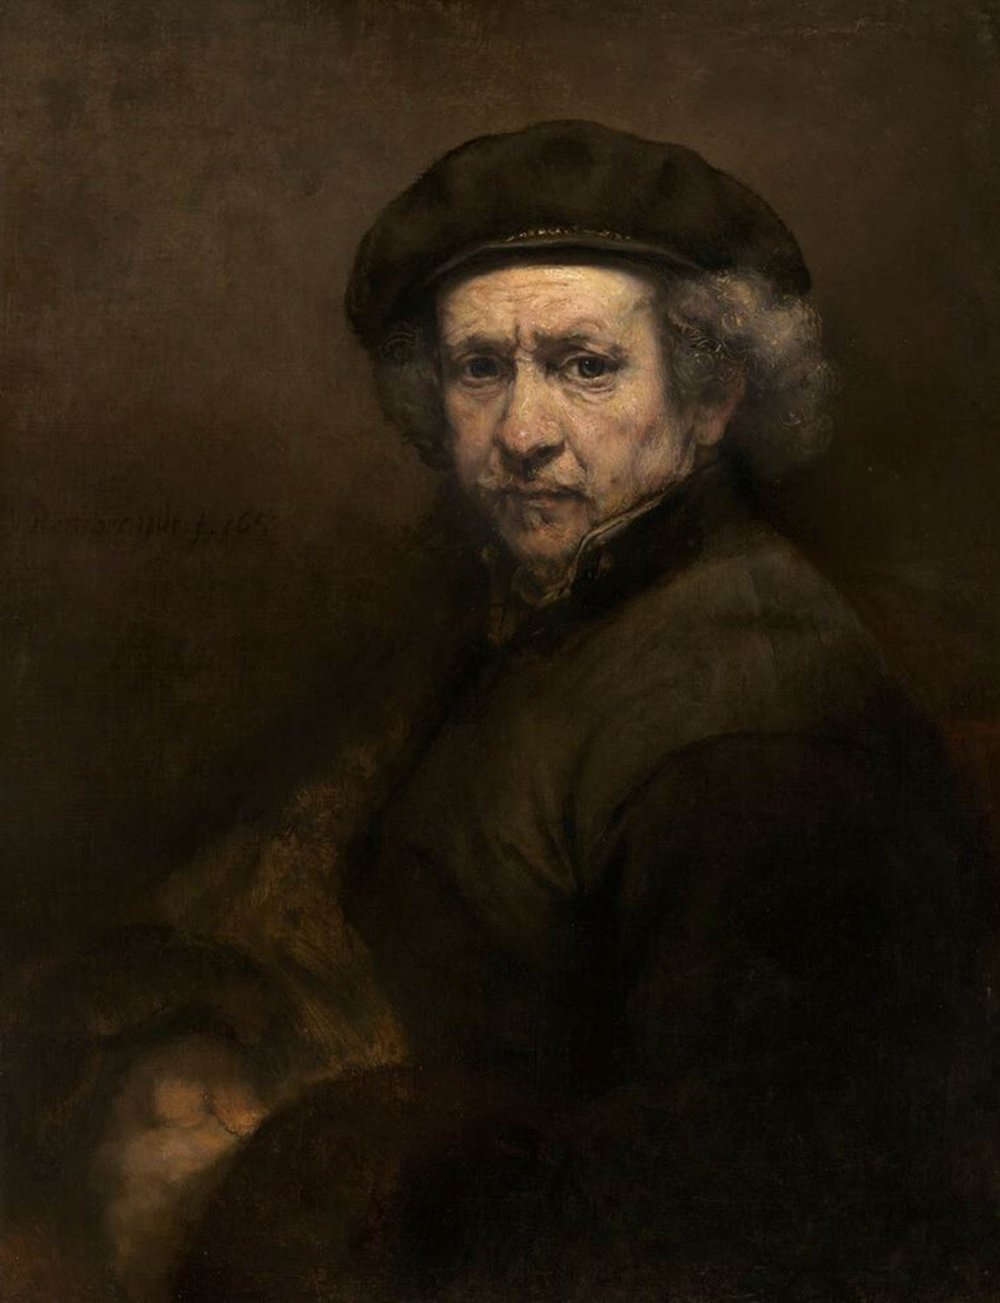  ORIGINAL  Self Portrait by Rembrandt